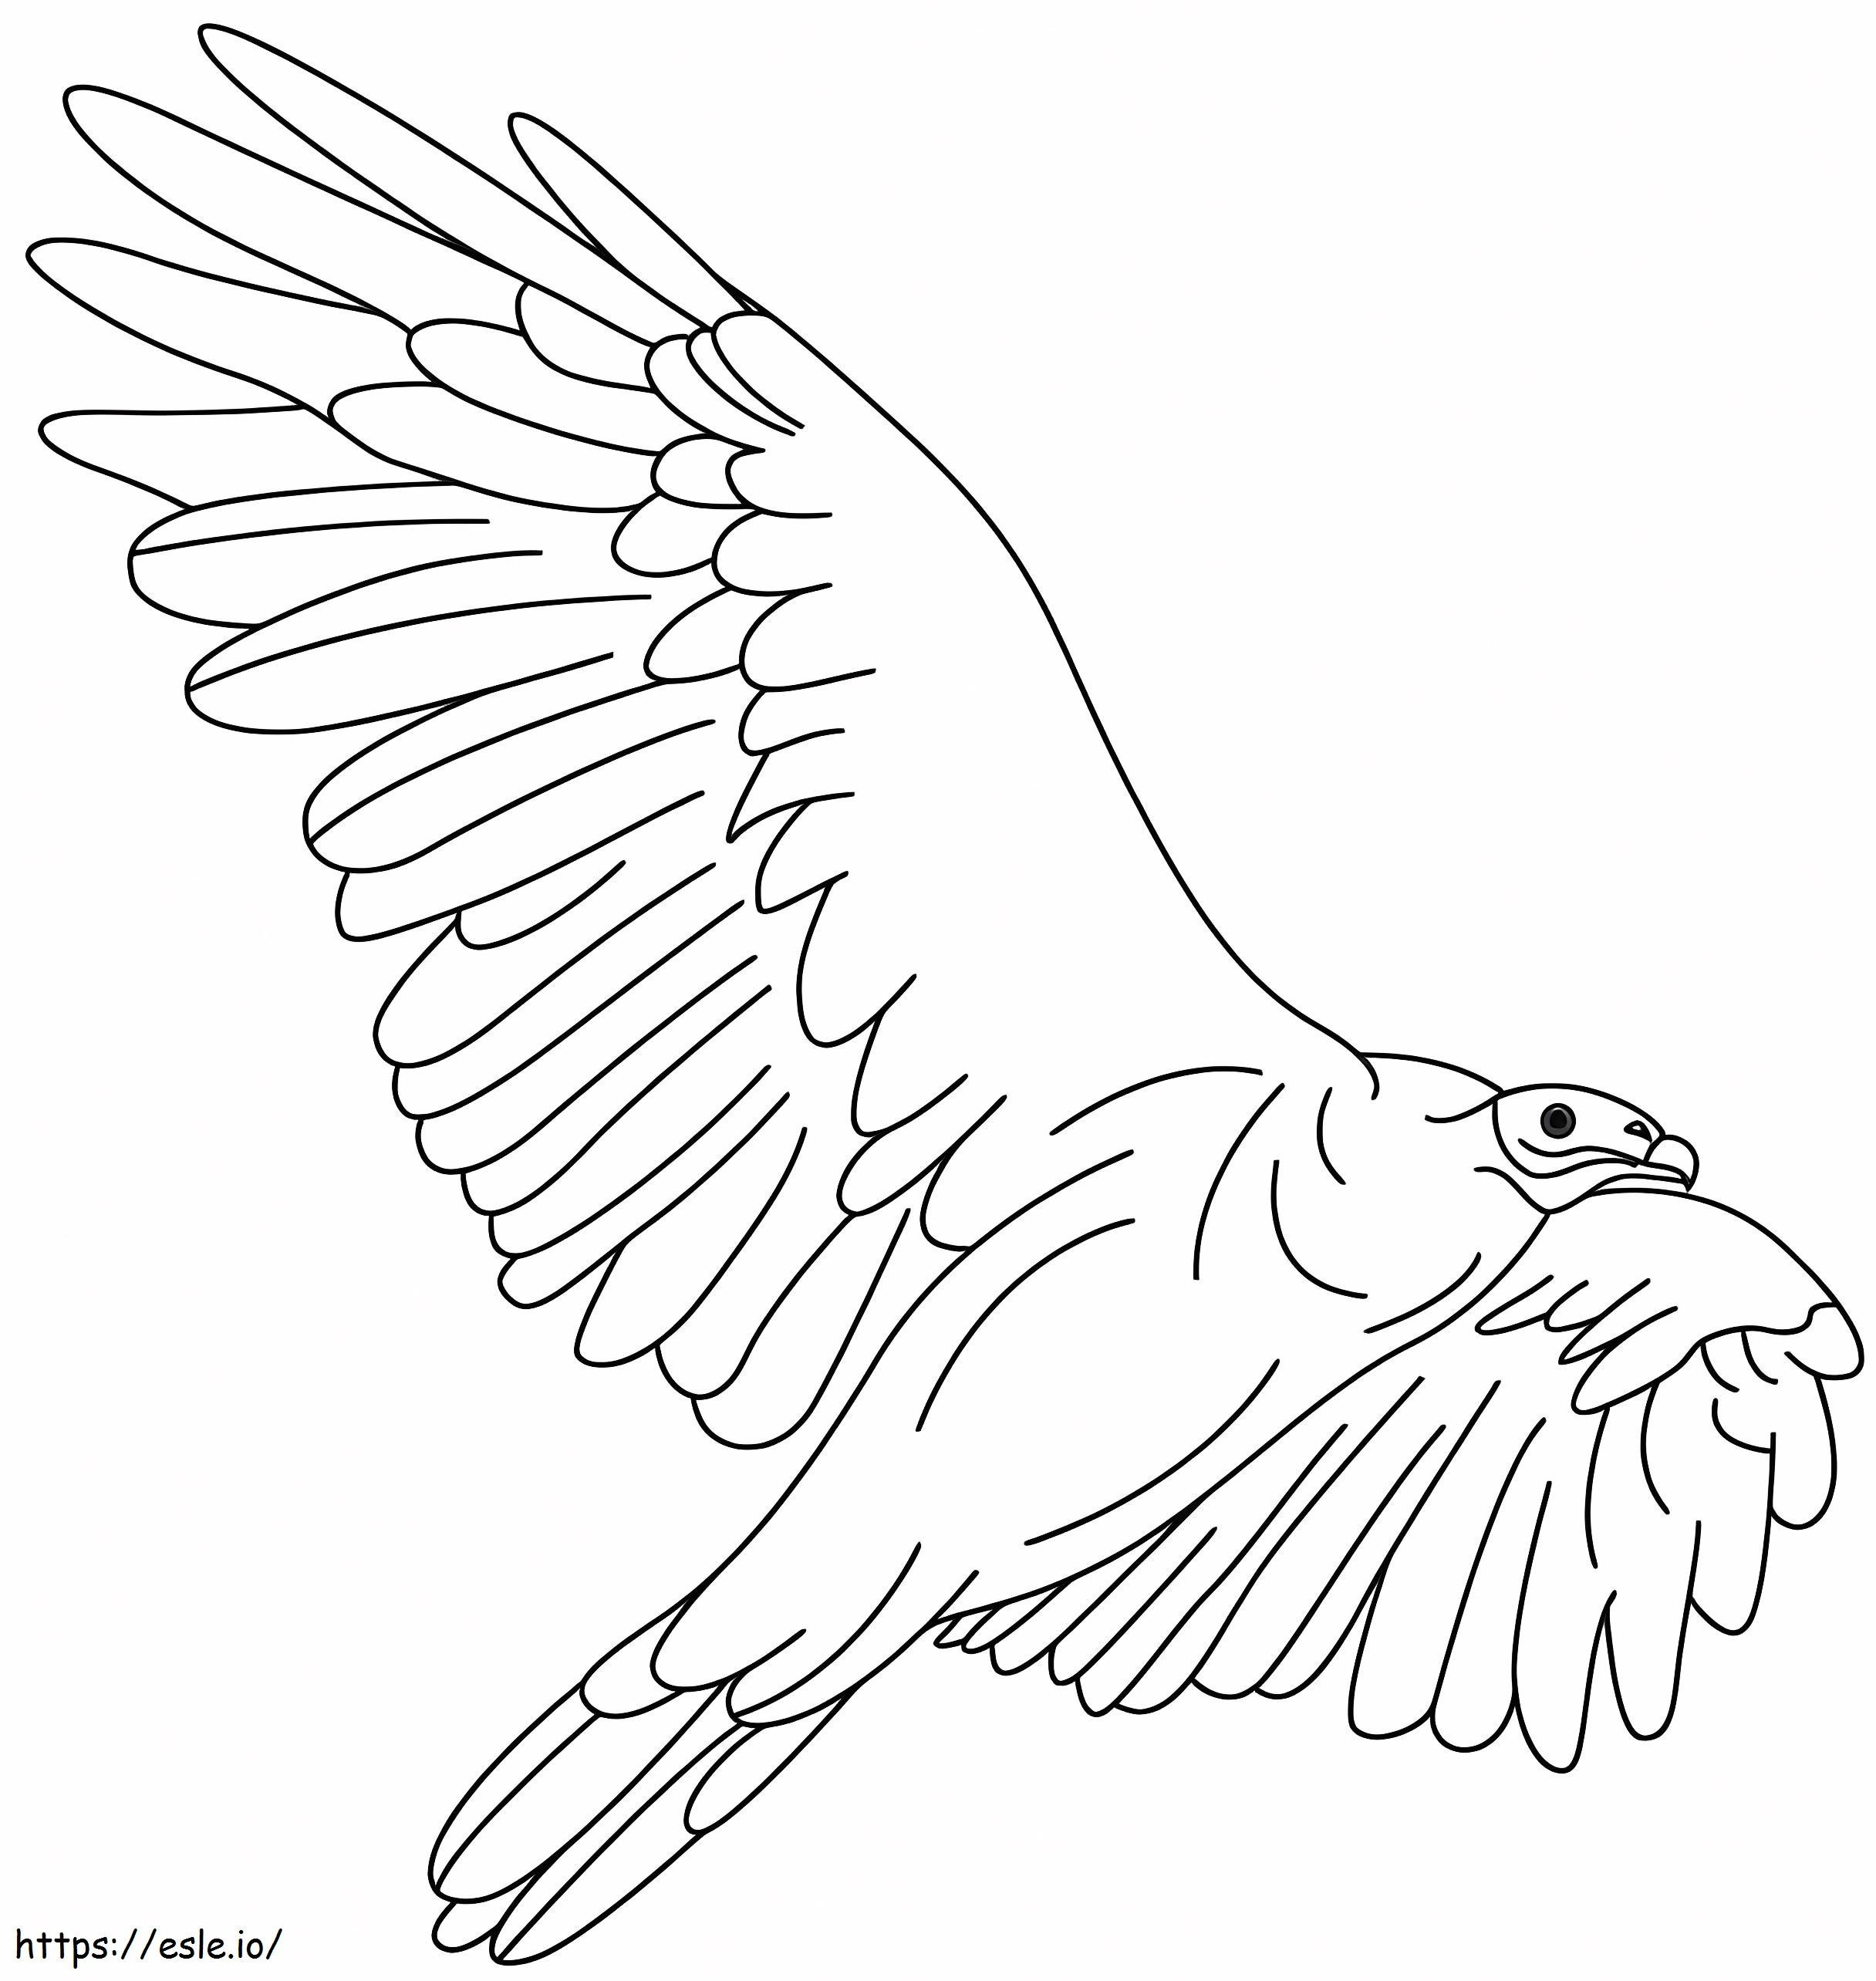 Coloriage Condor impressionnant à imprimer dessin